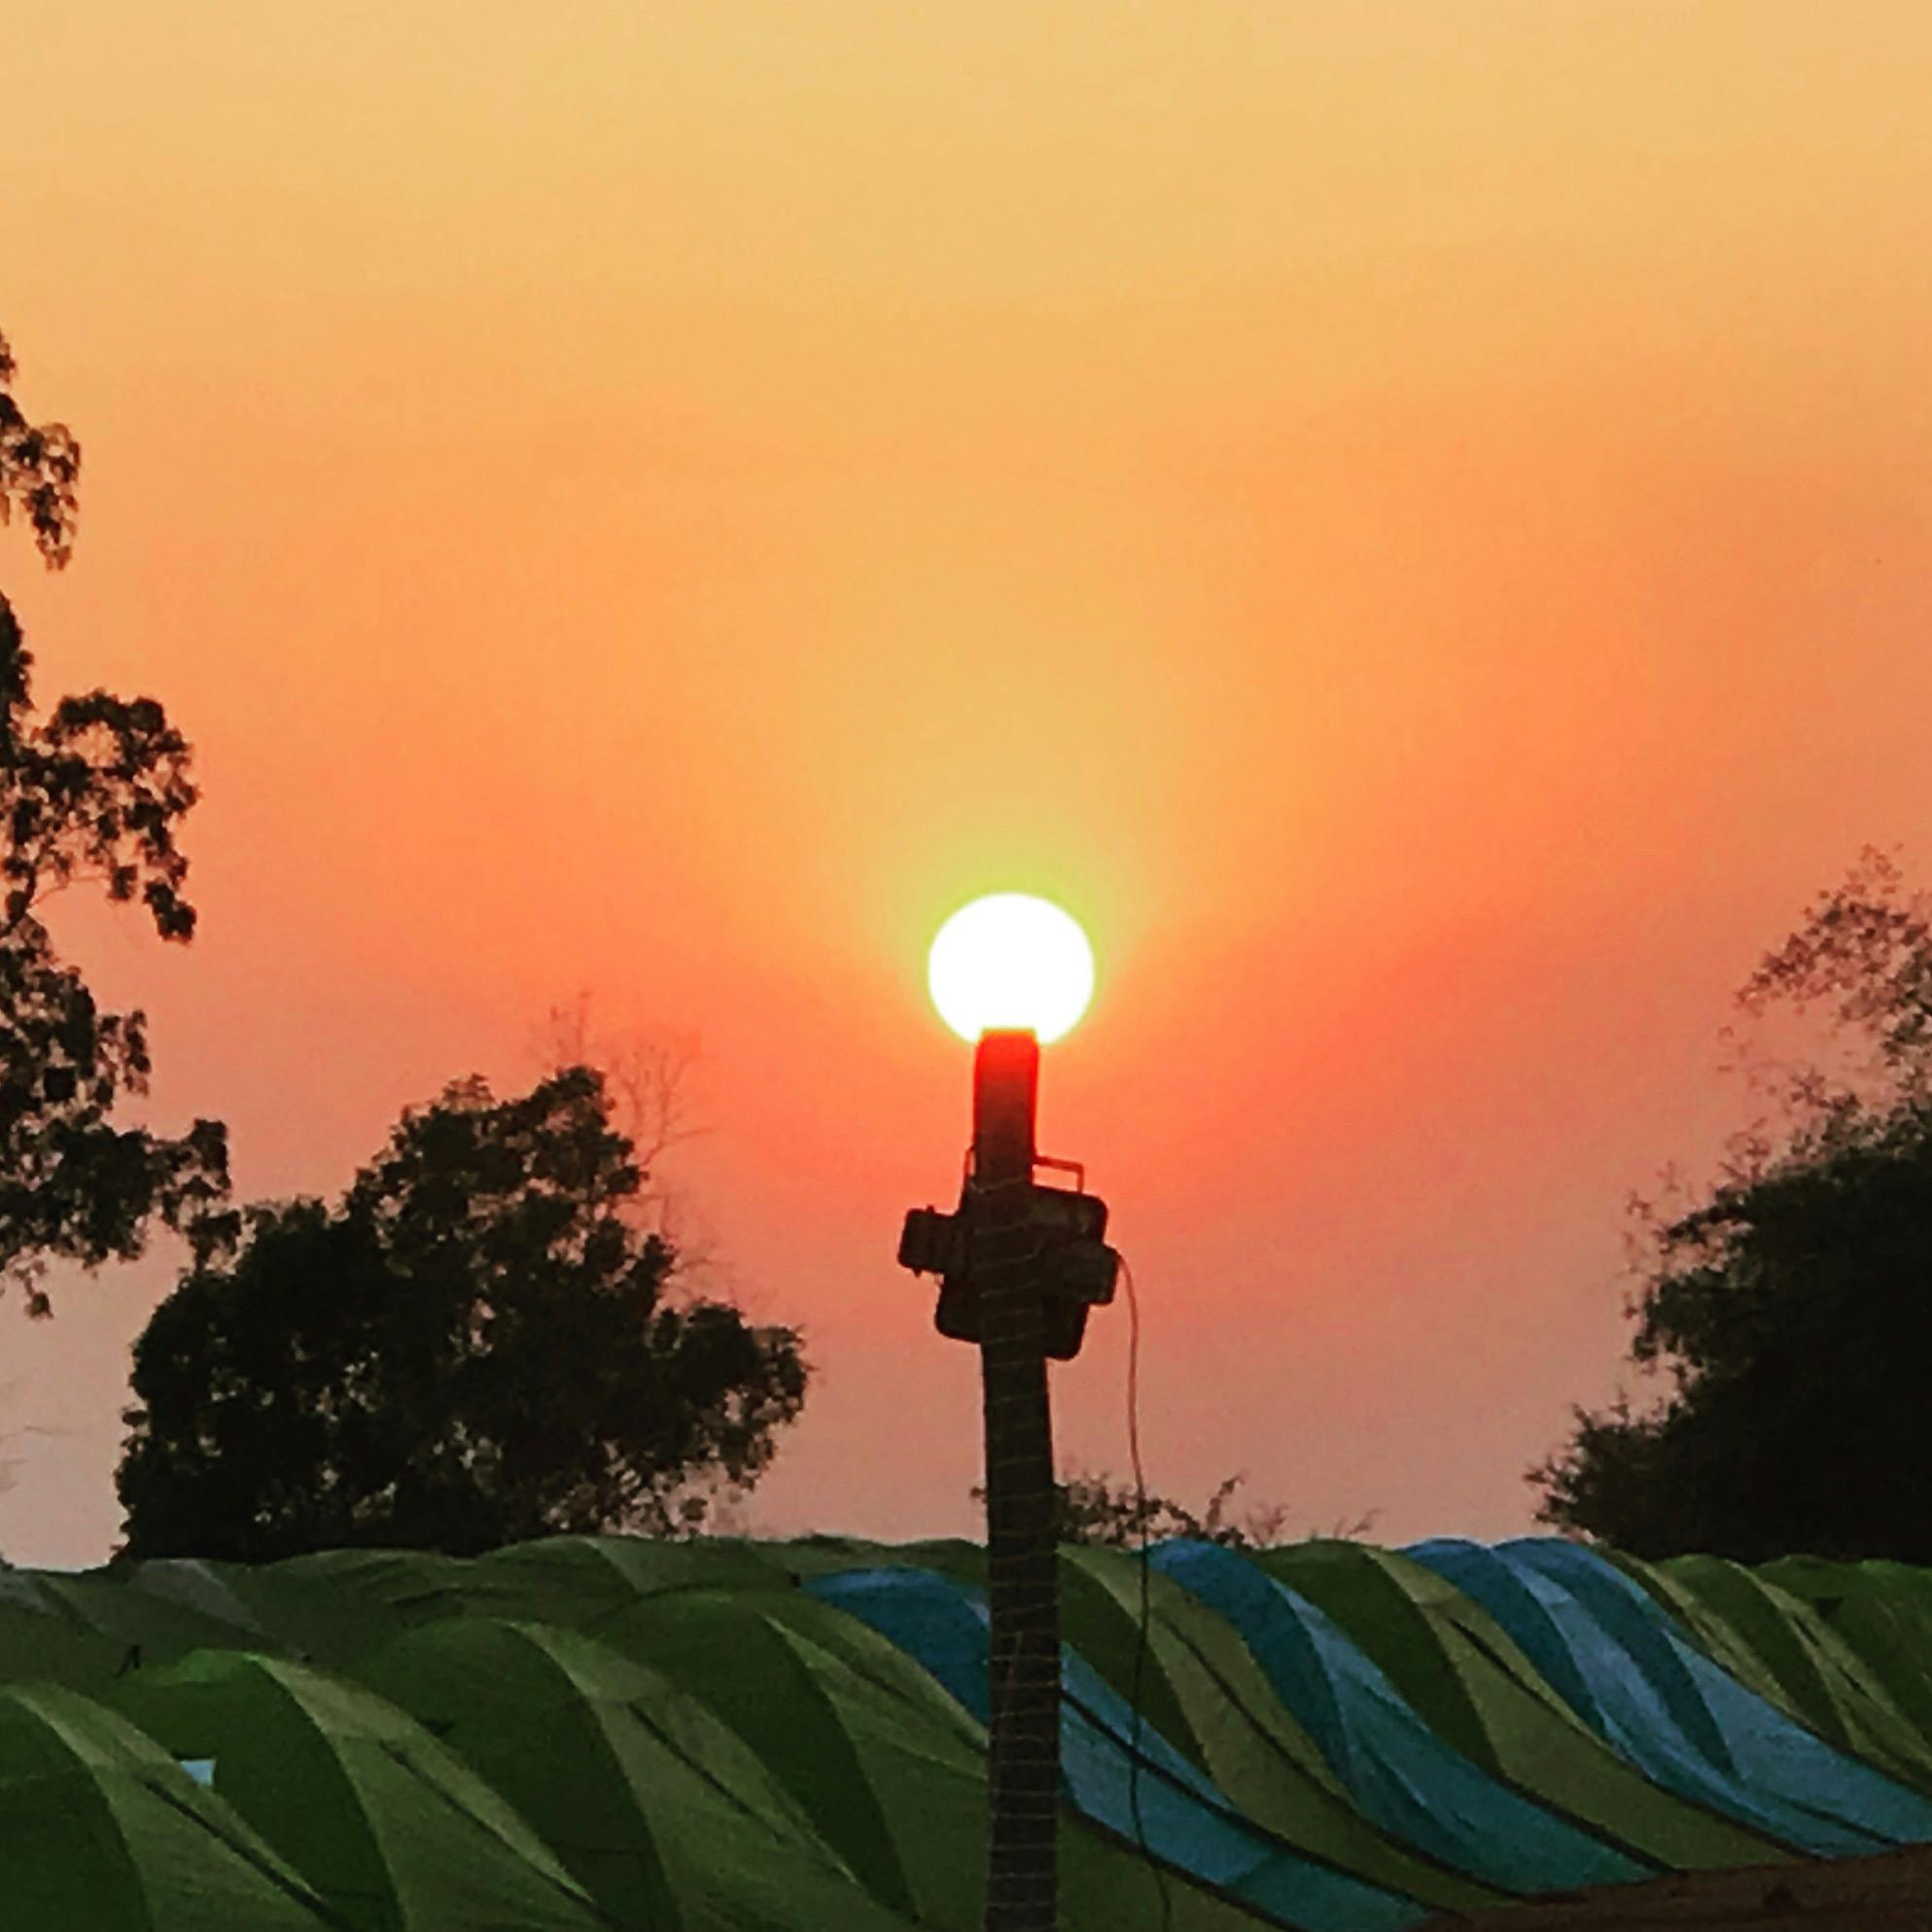 Free stock photo of Sunset Lamp